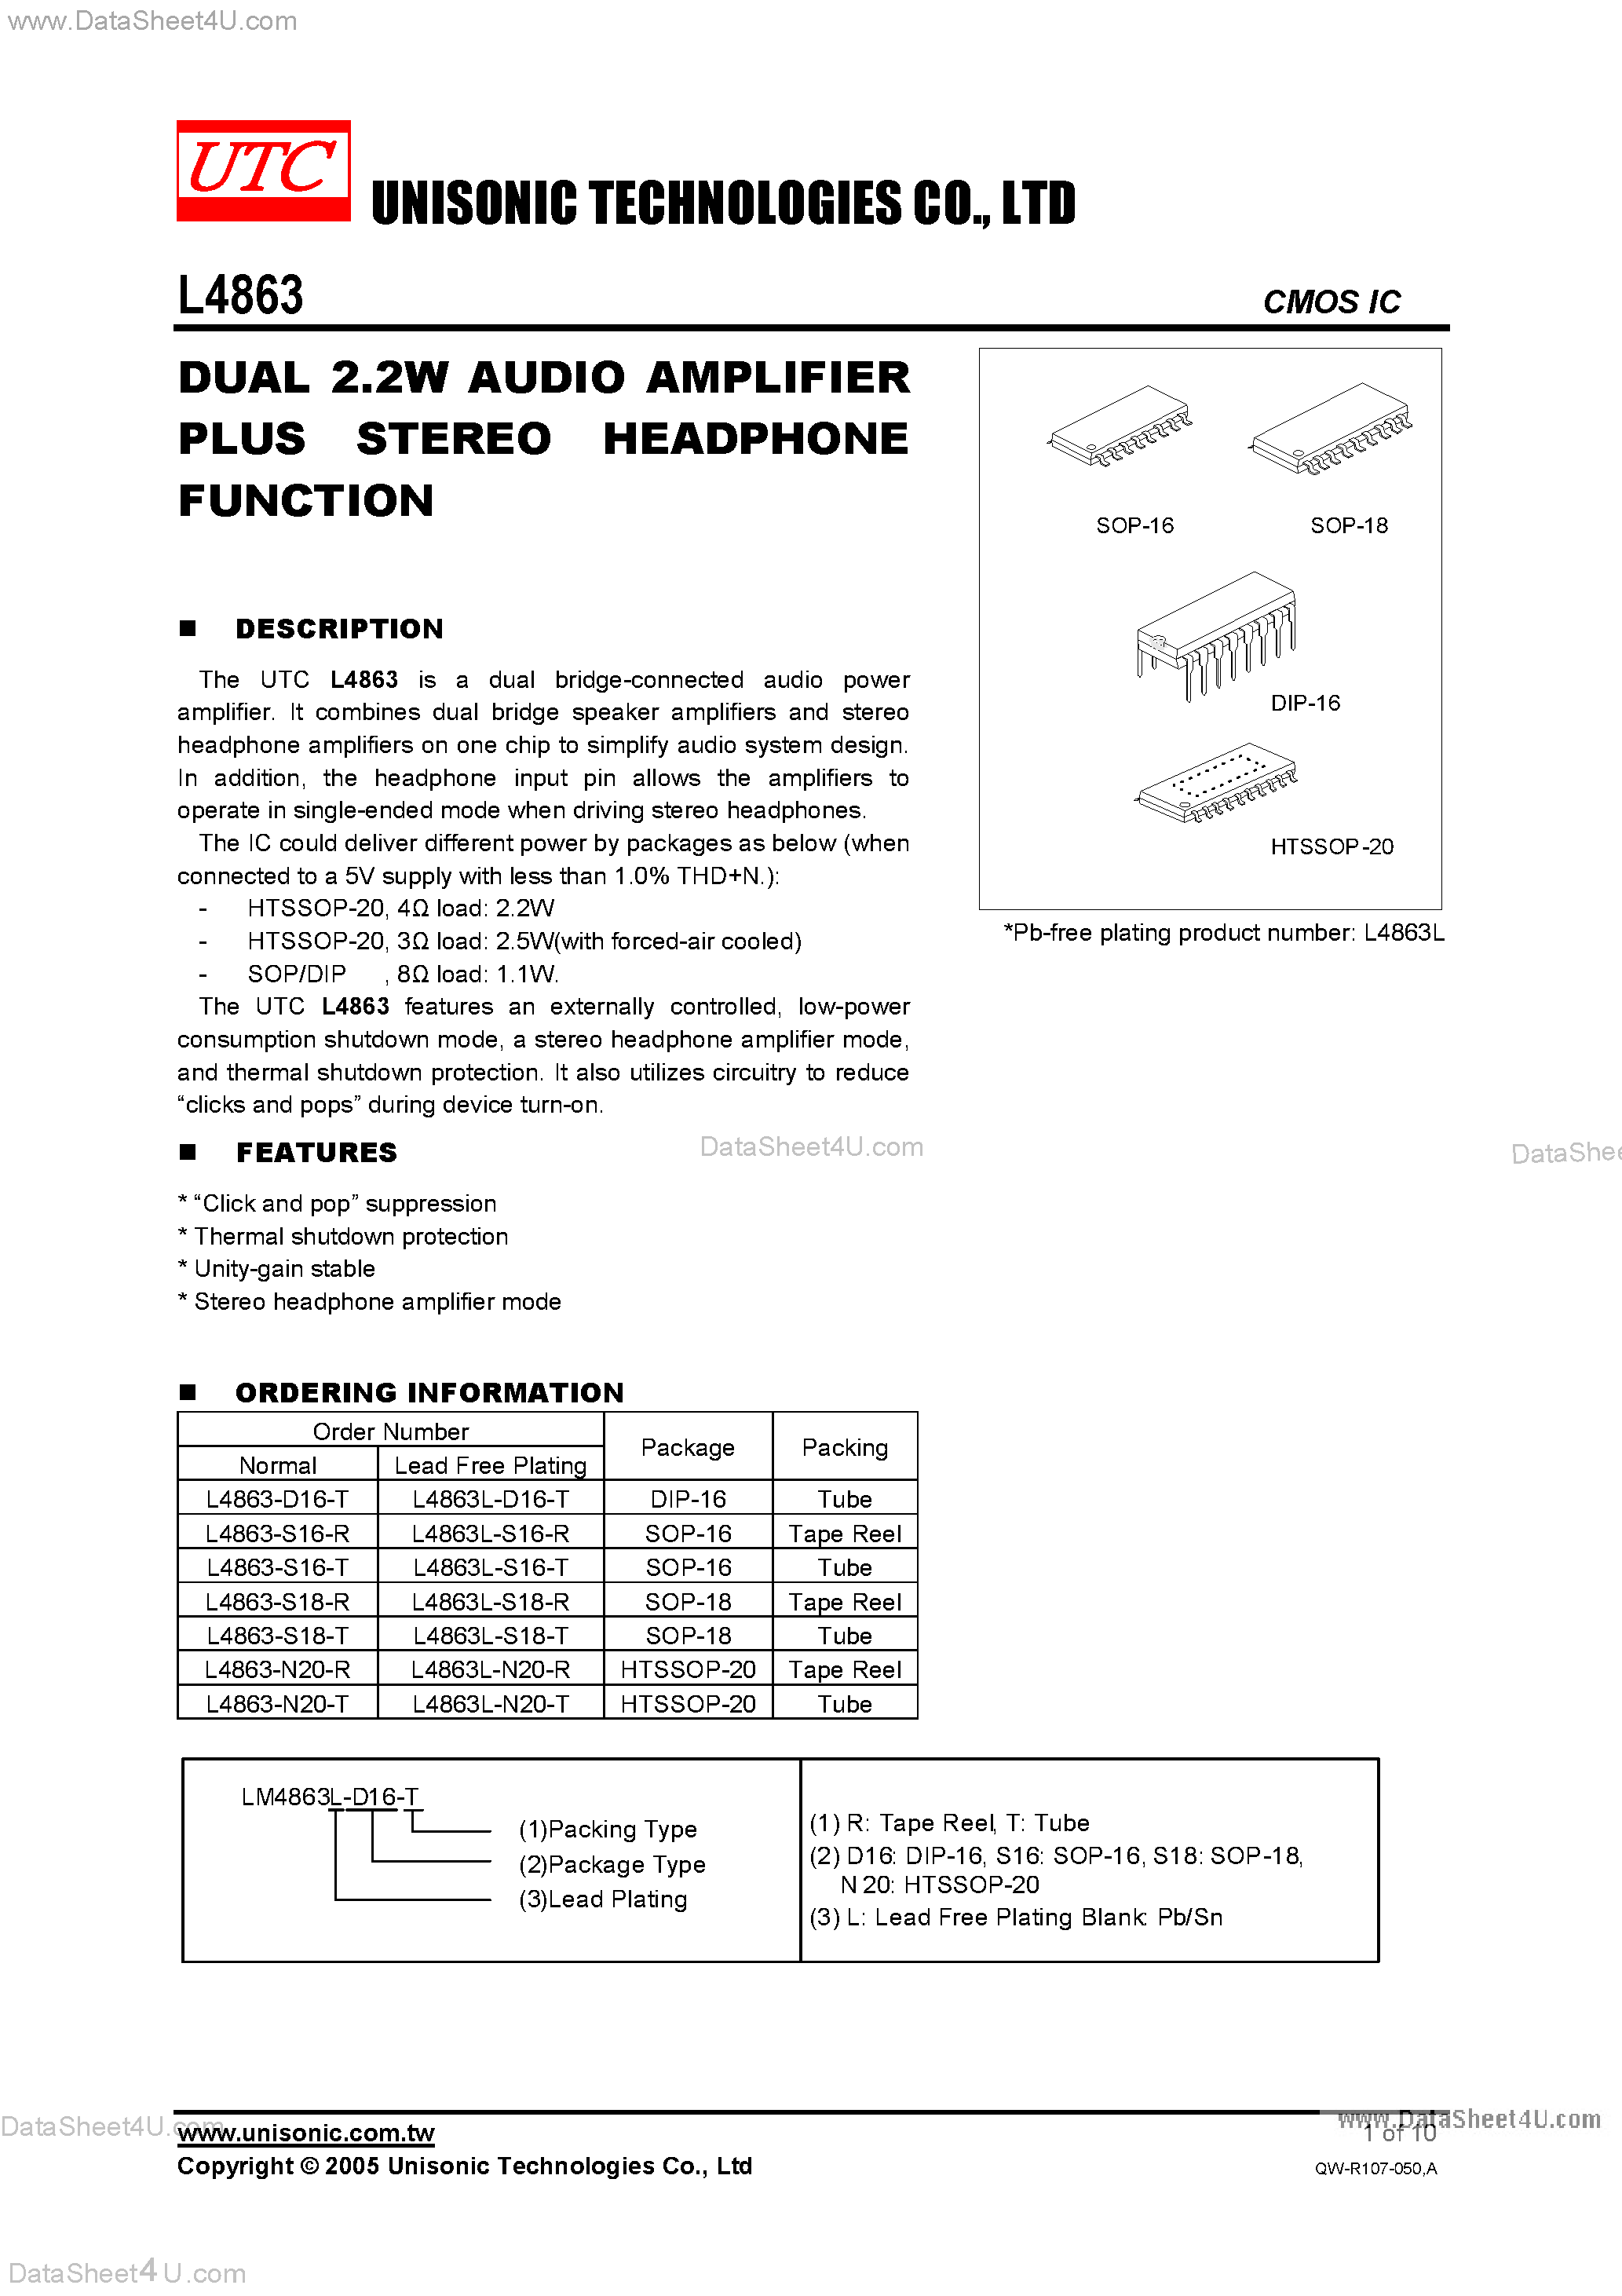 Даташит L-4863 - Dual 2.2W Audio Amplifier Plus Stereo Headphone Function страница 1